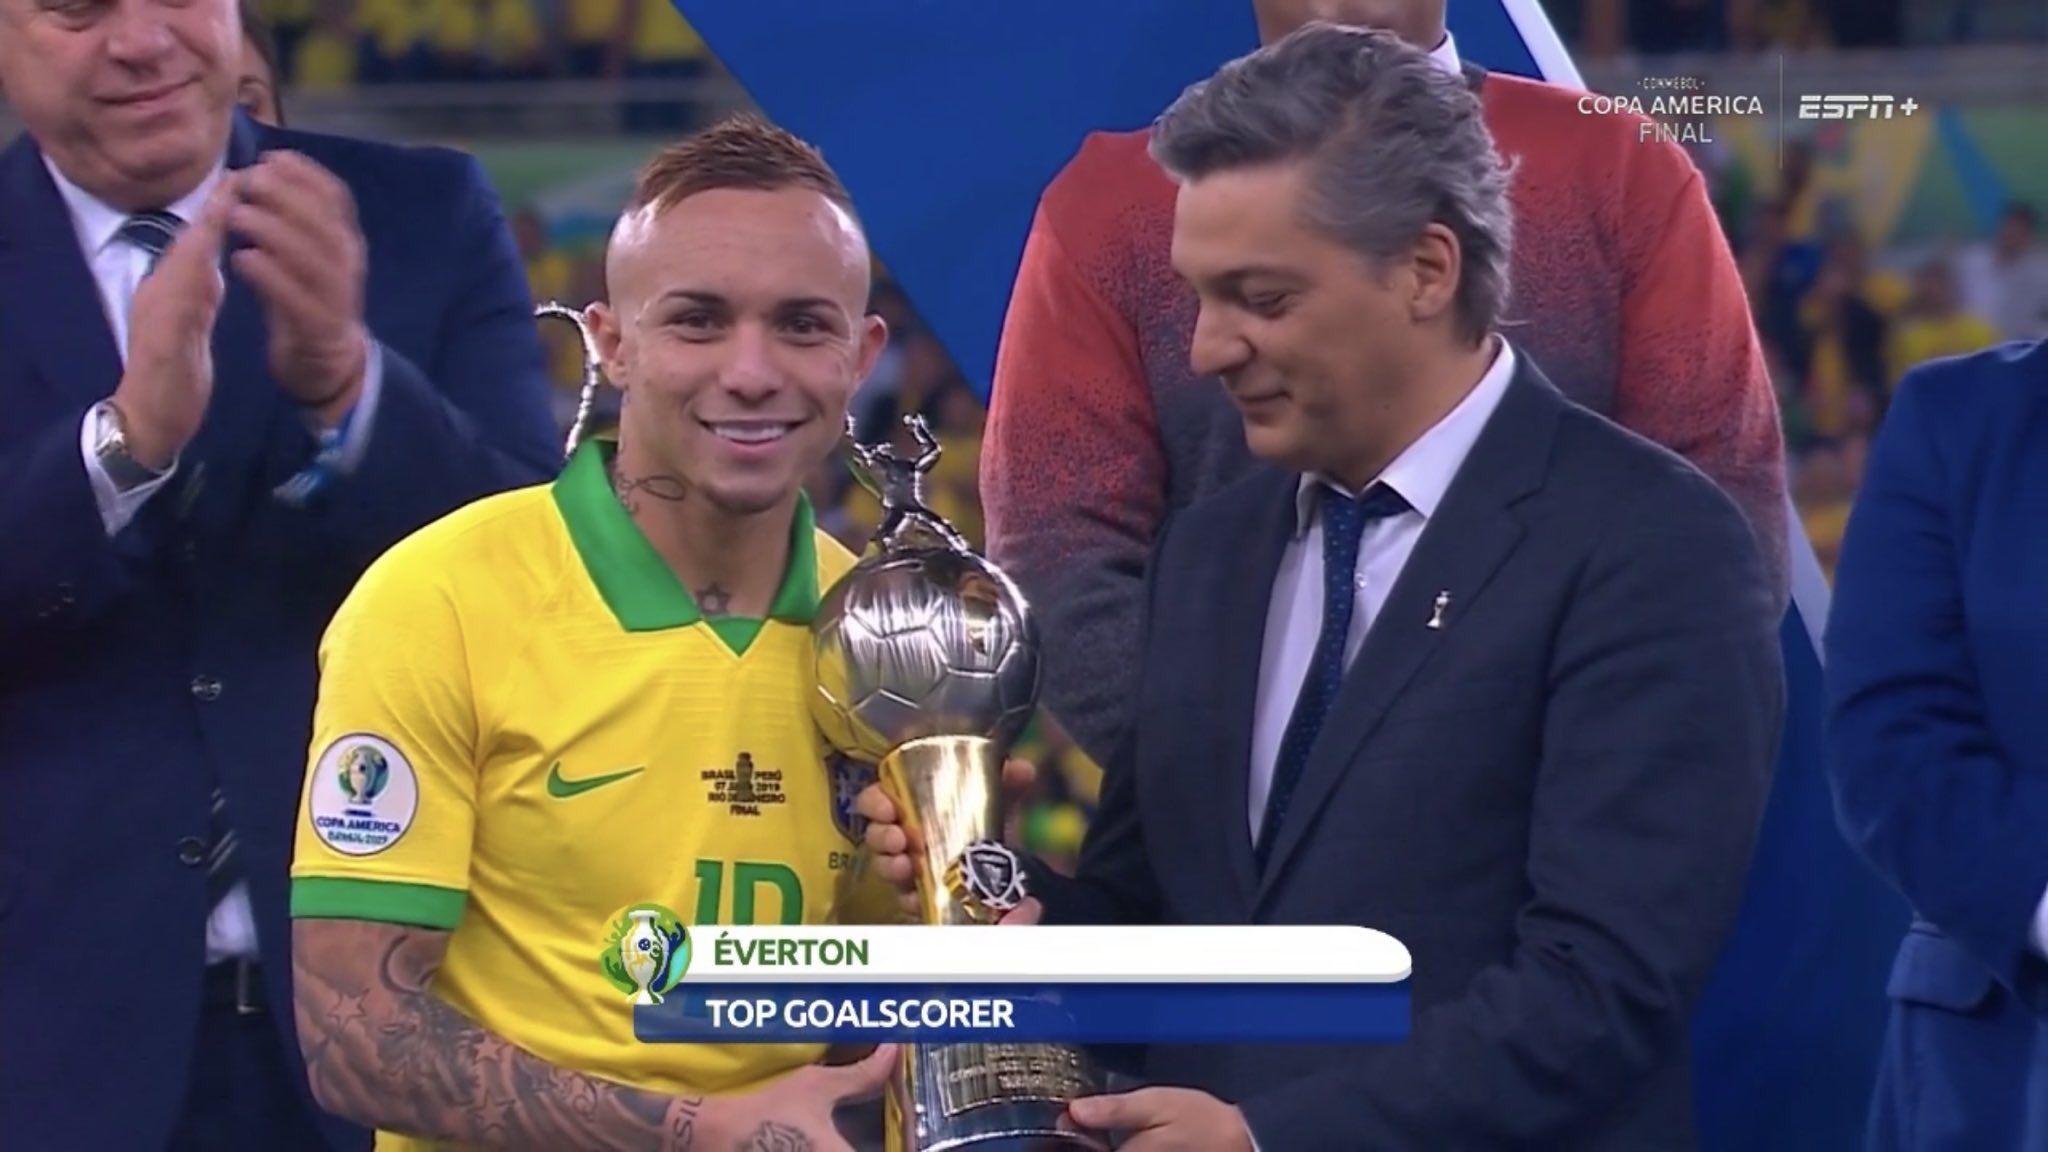 Brasil Football 🇧🇷 "OFFICIAL: (23) is top goal scorer of the 2019 Copa America! https://t.co/iUhCTv1oj0" / Twitter